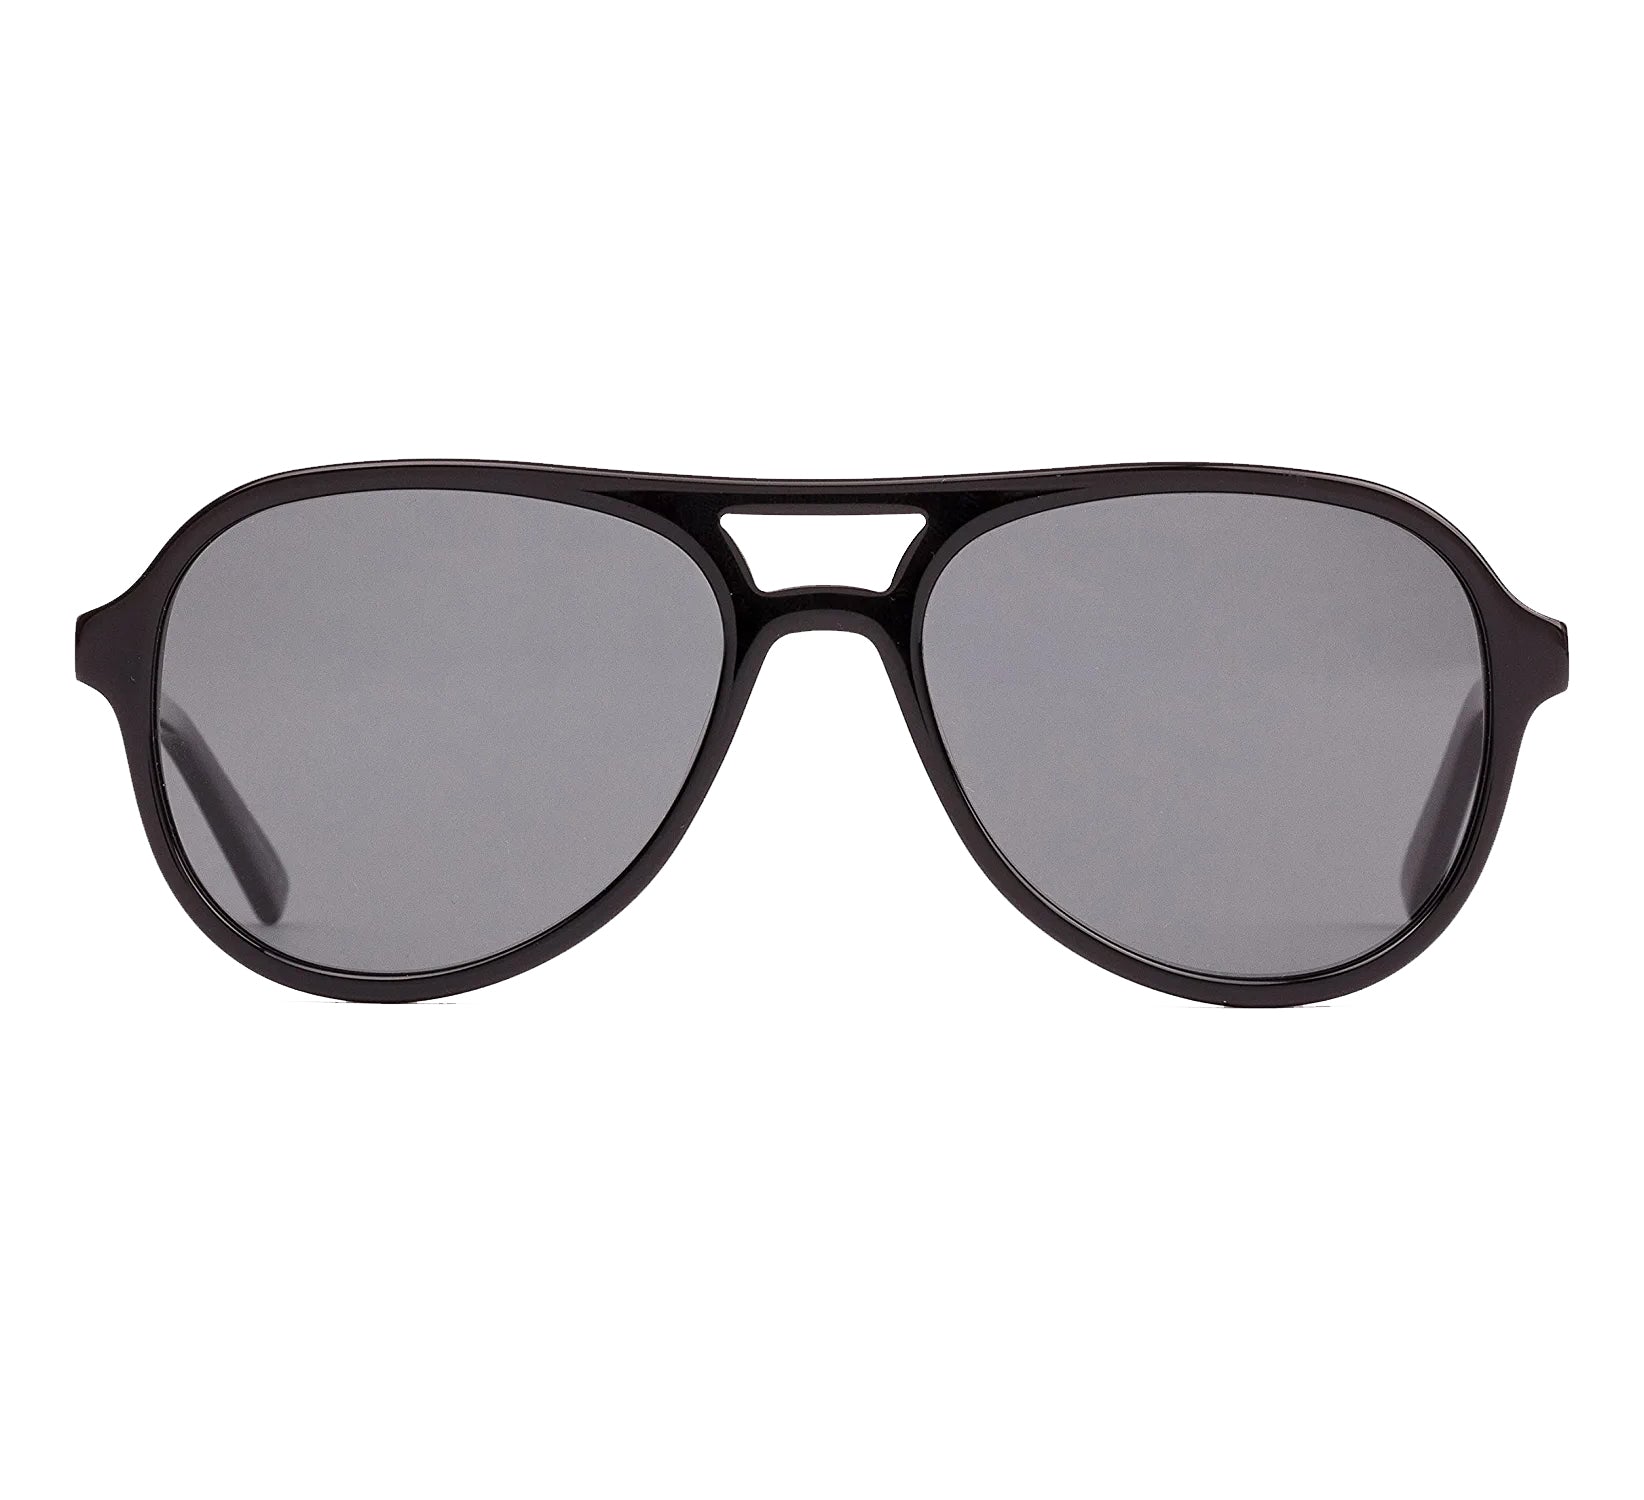 Sito Nightfever Polarized Sunglasses